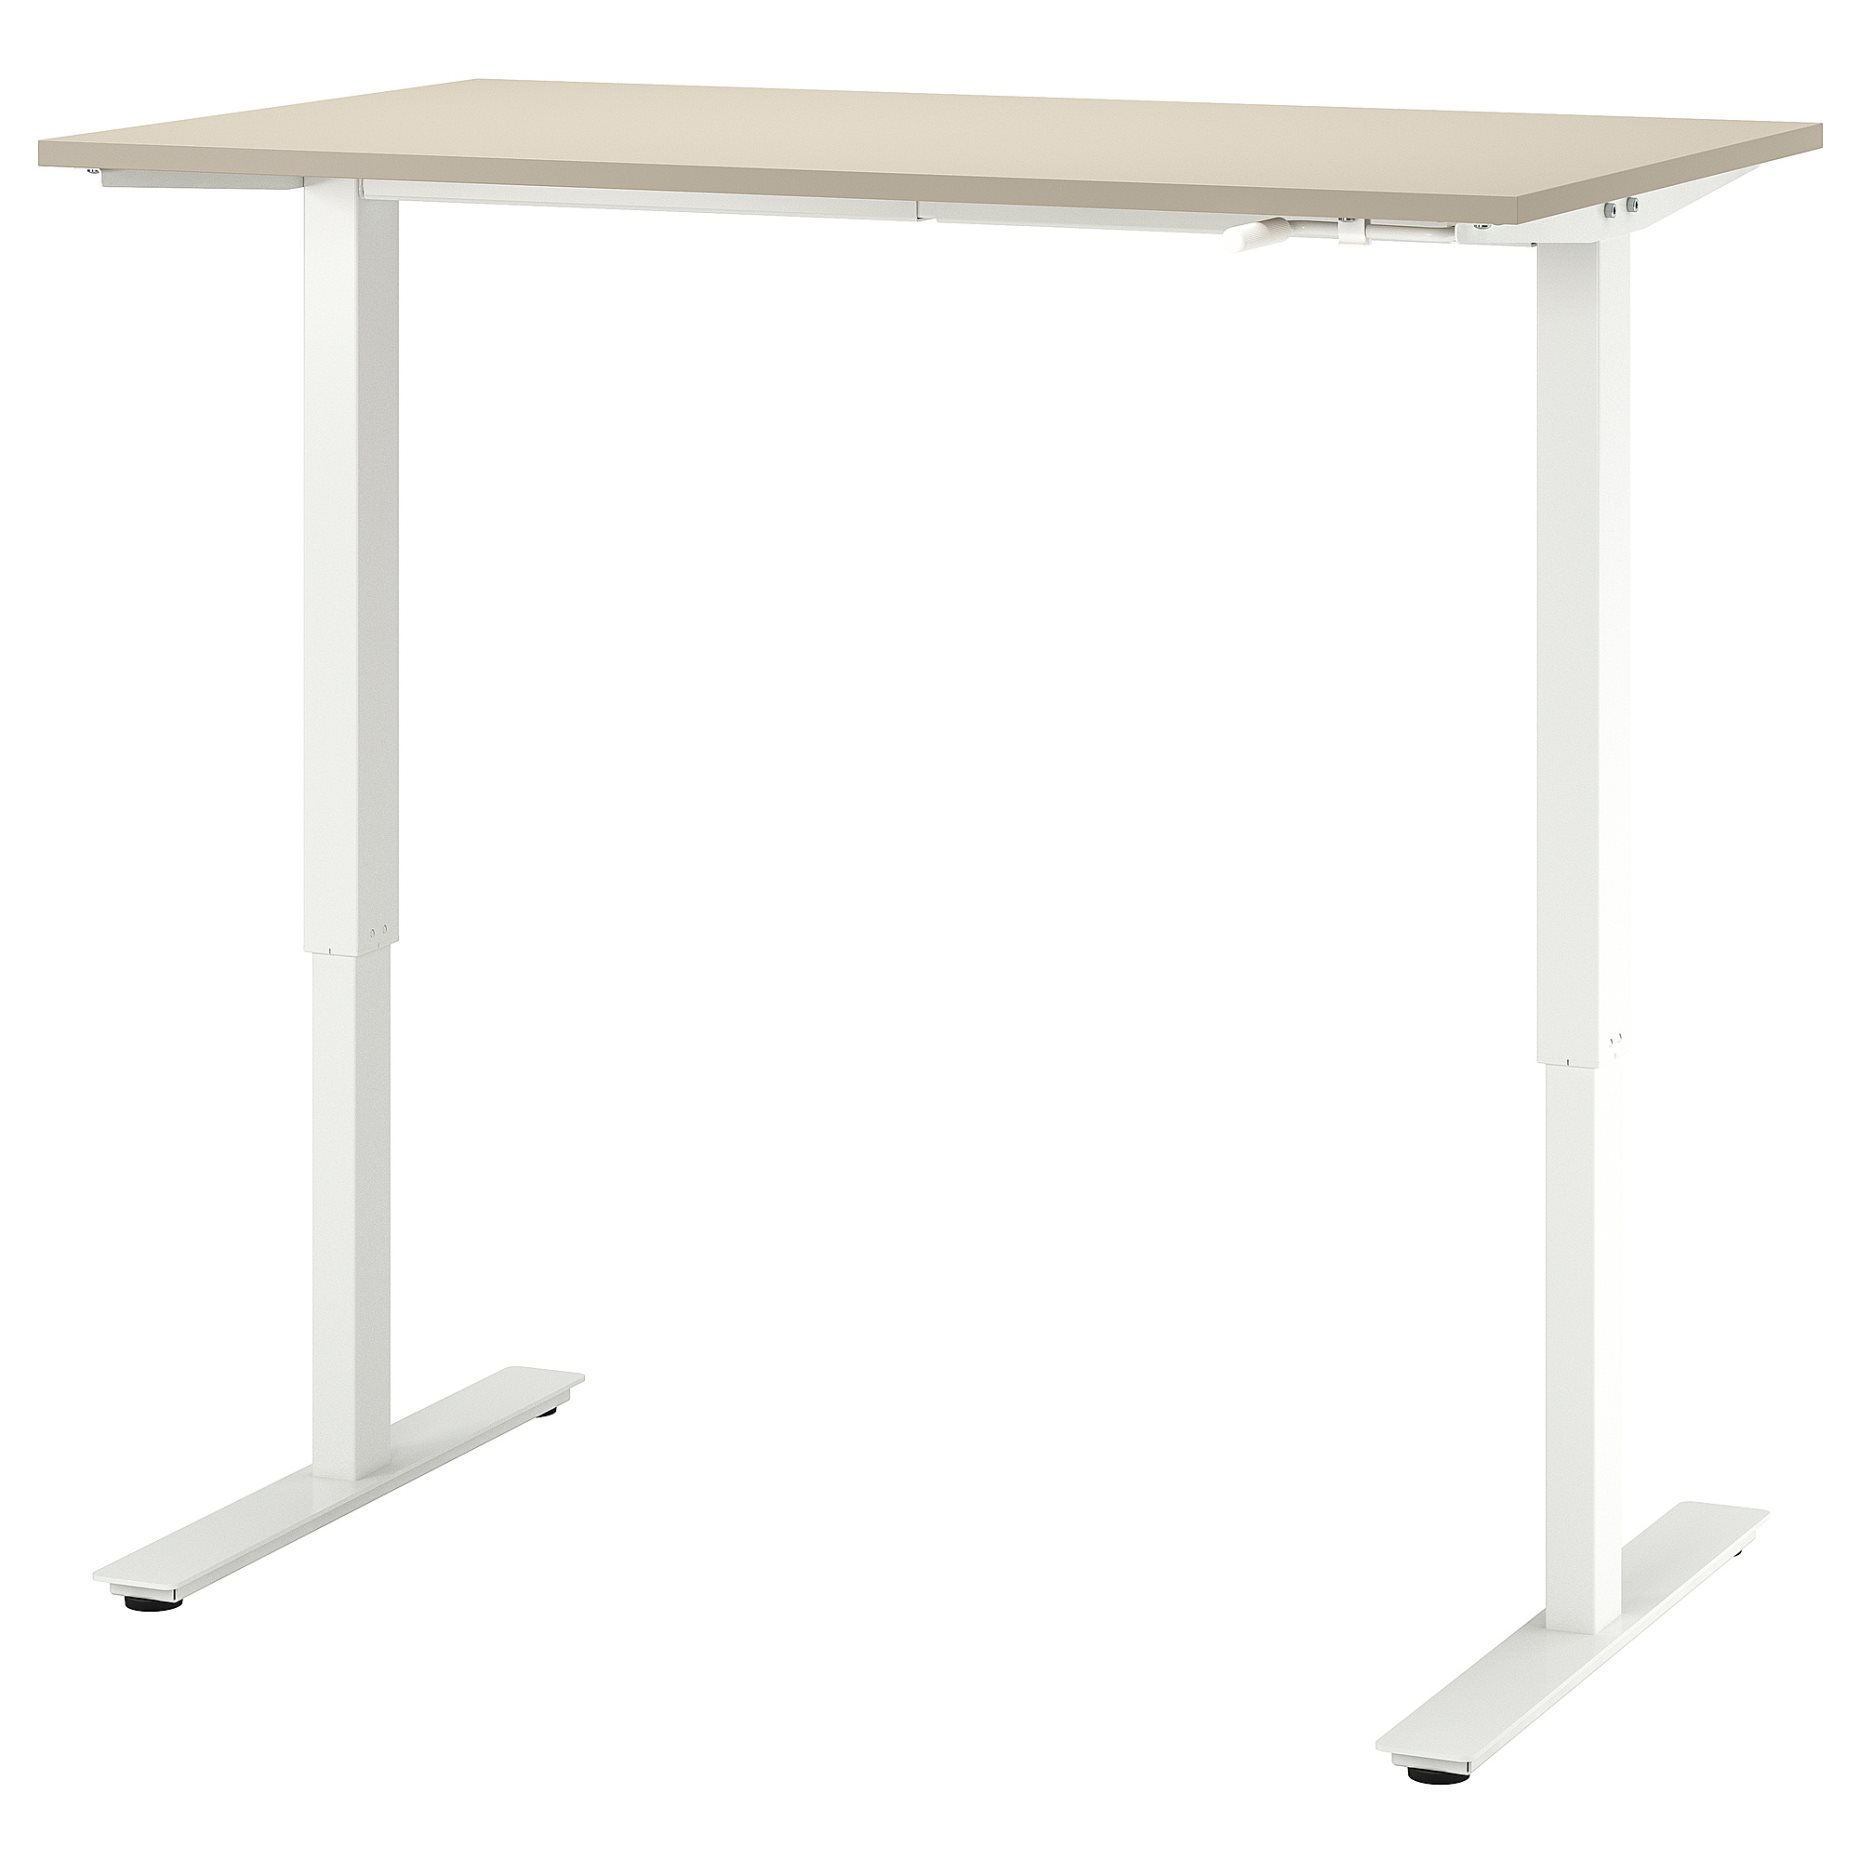 TROTTEN, table top, 120x70 cm, 504.748.45